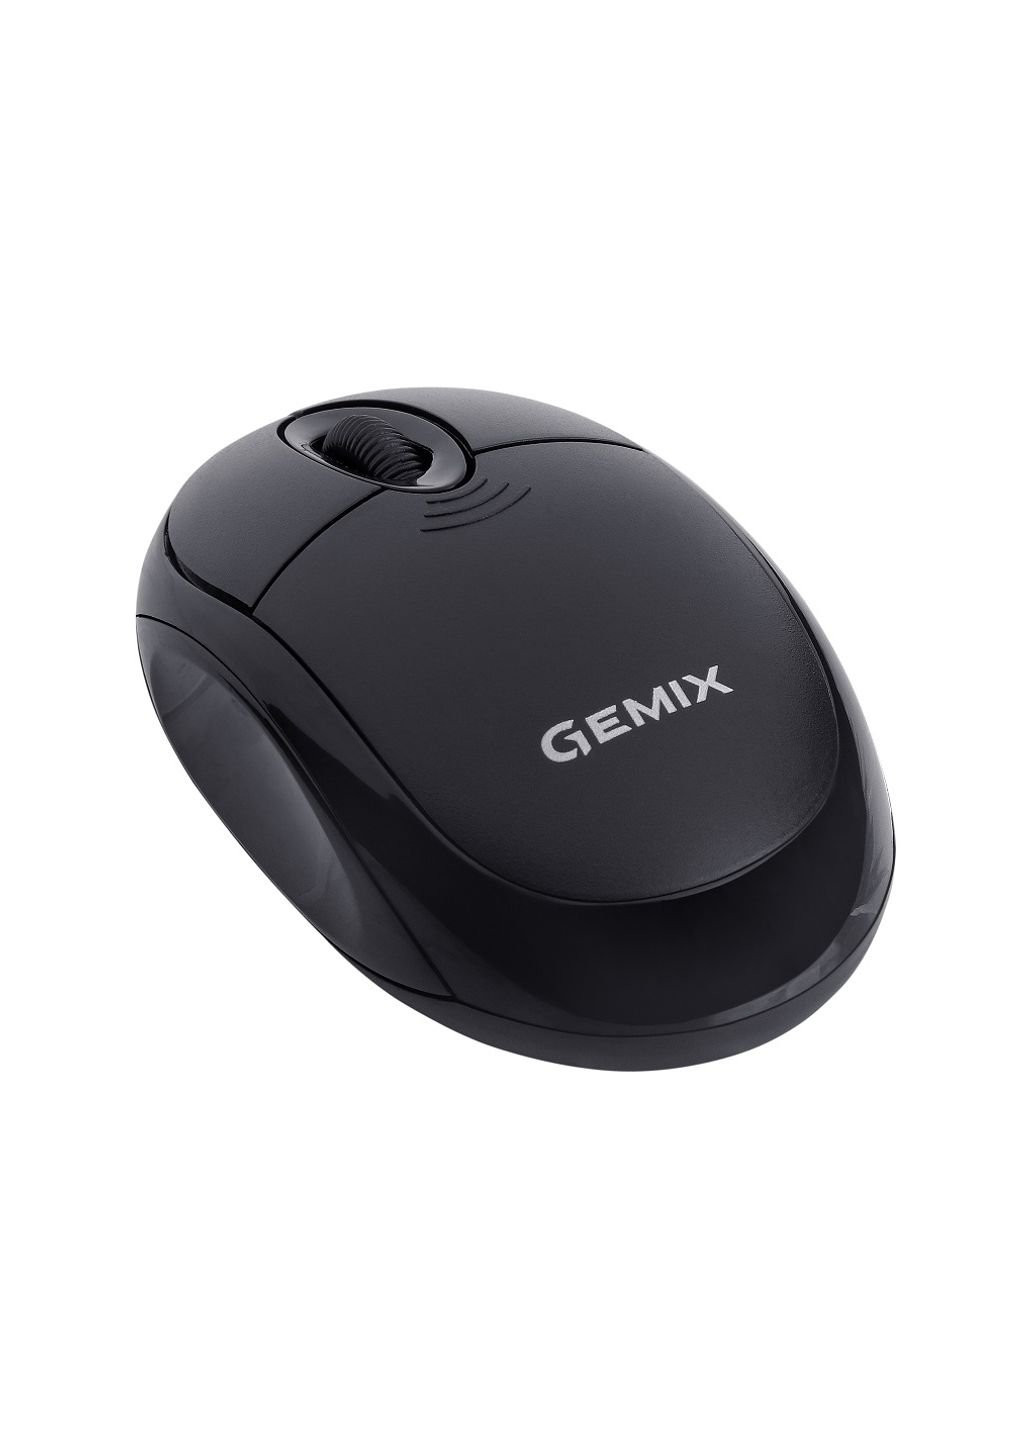 Мышка GM185 Wireless Black (GM185Bk) Gemix (253432296)